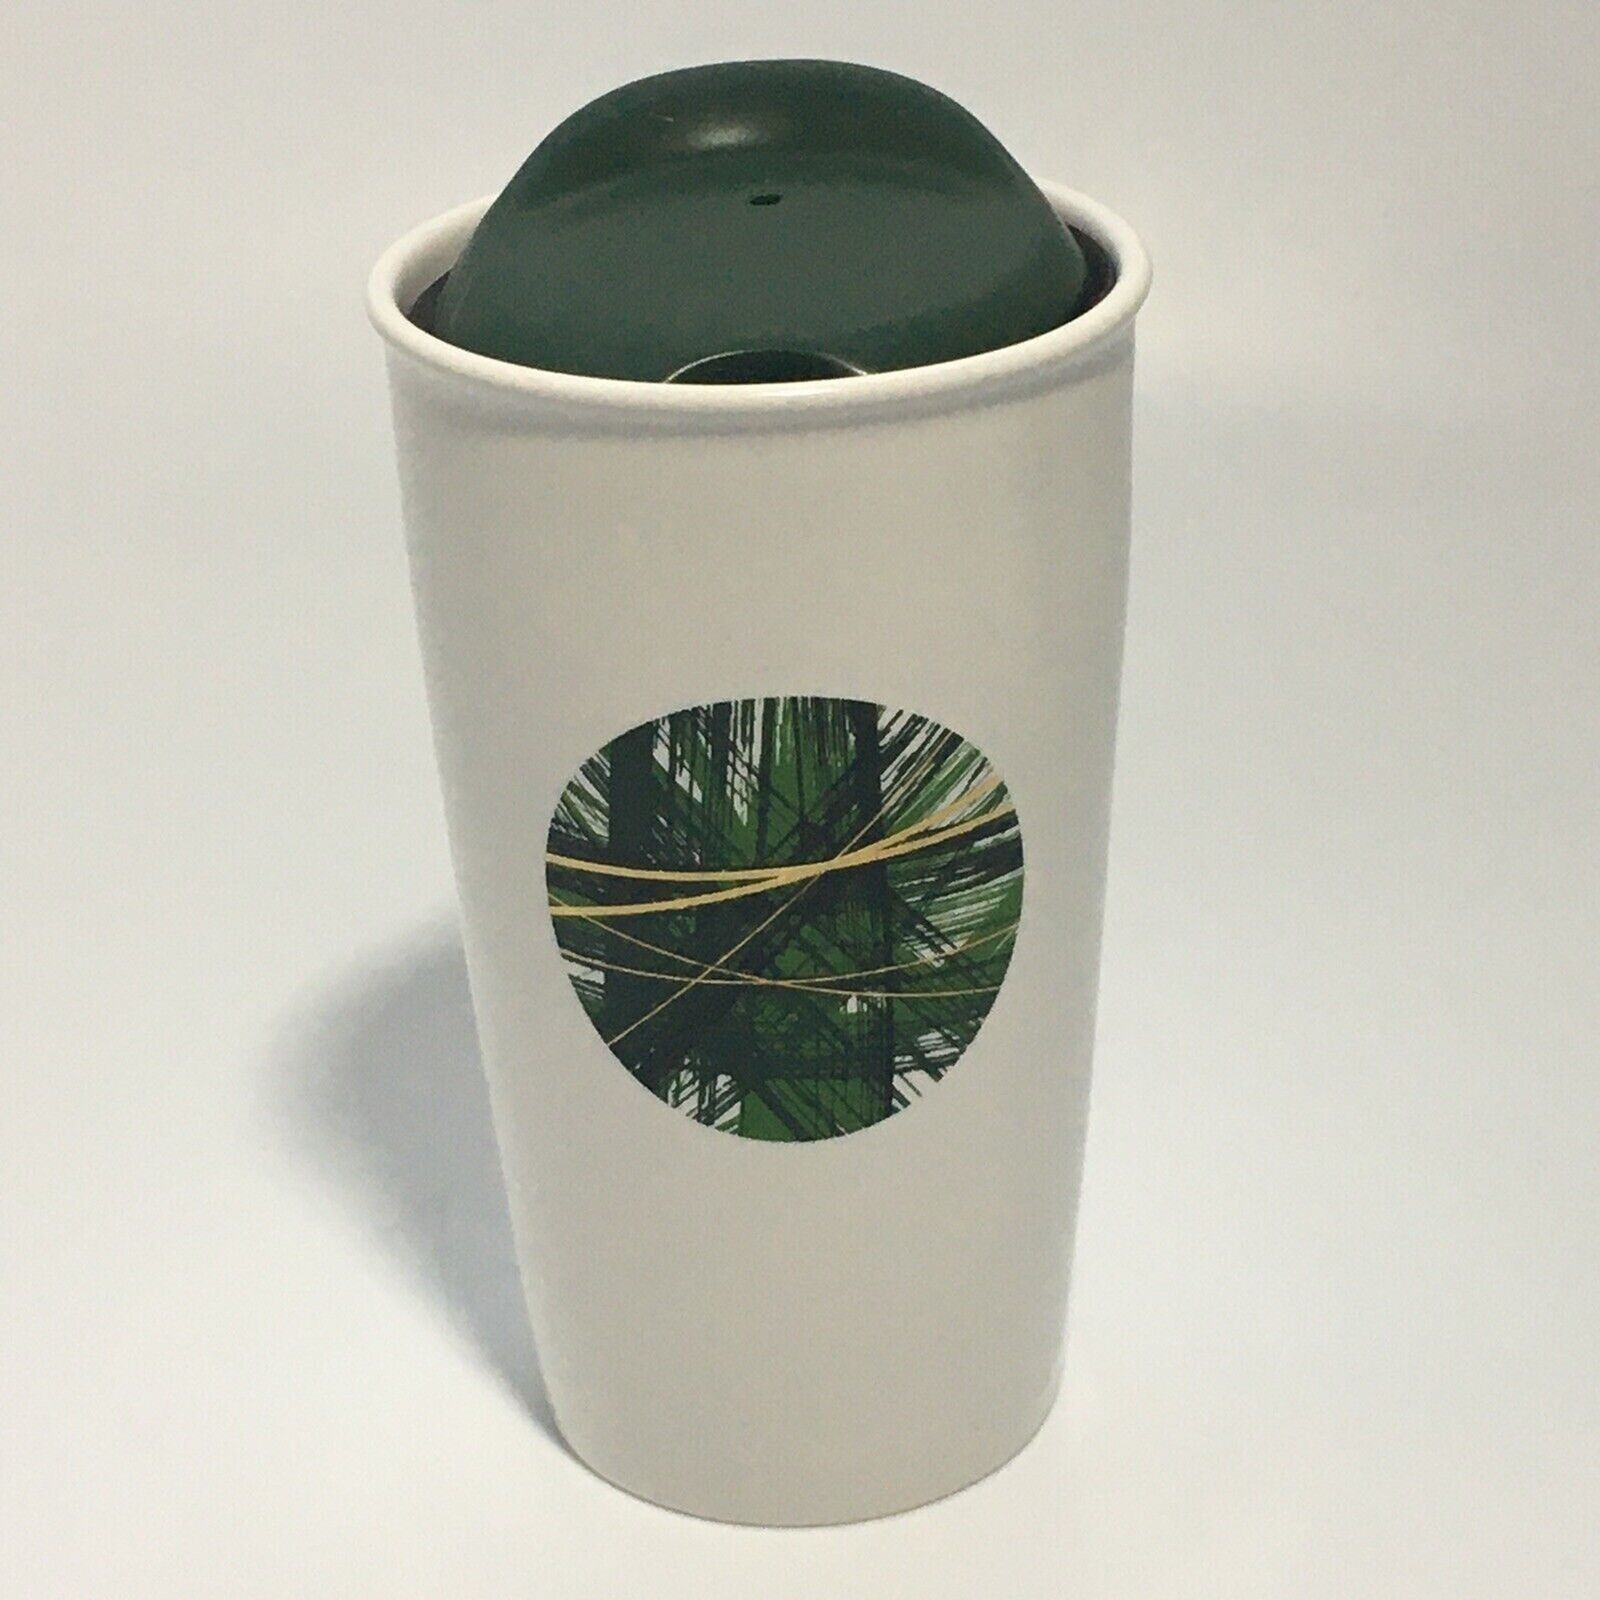 Starbucks 2014 Travel Mug Tumbler w Lid White Green Gold Lines Dot Ceramic 12 Oz